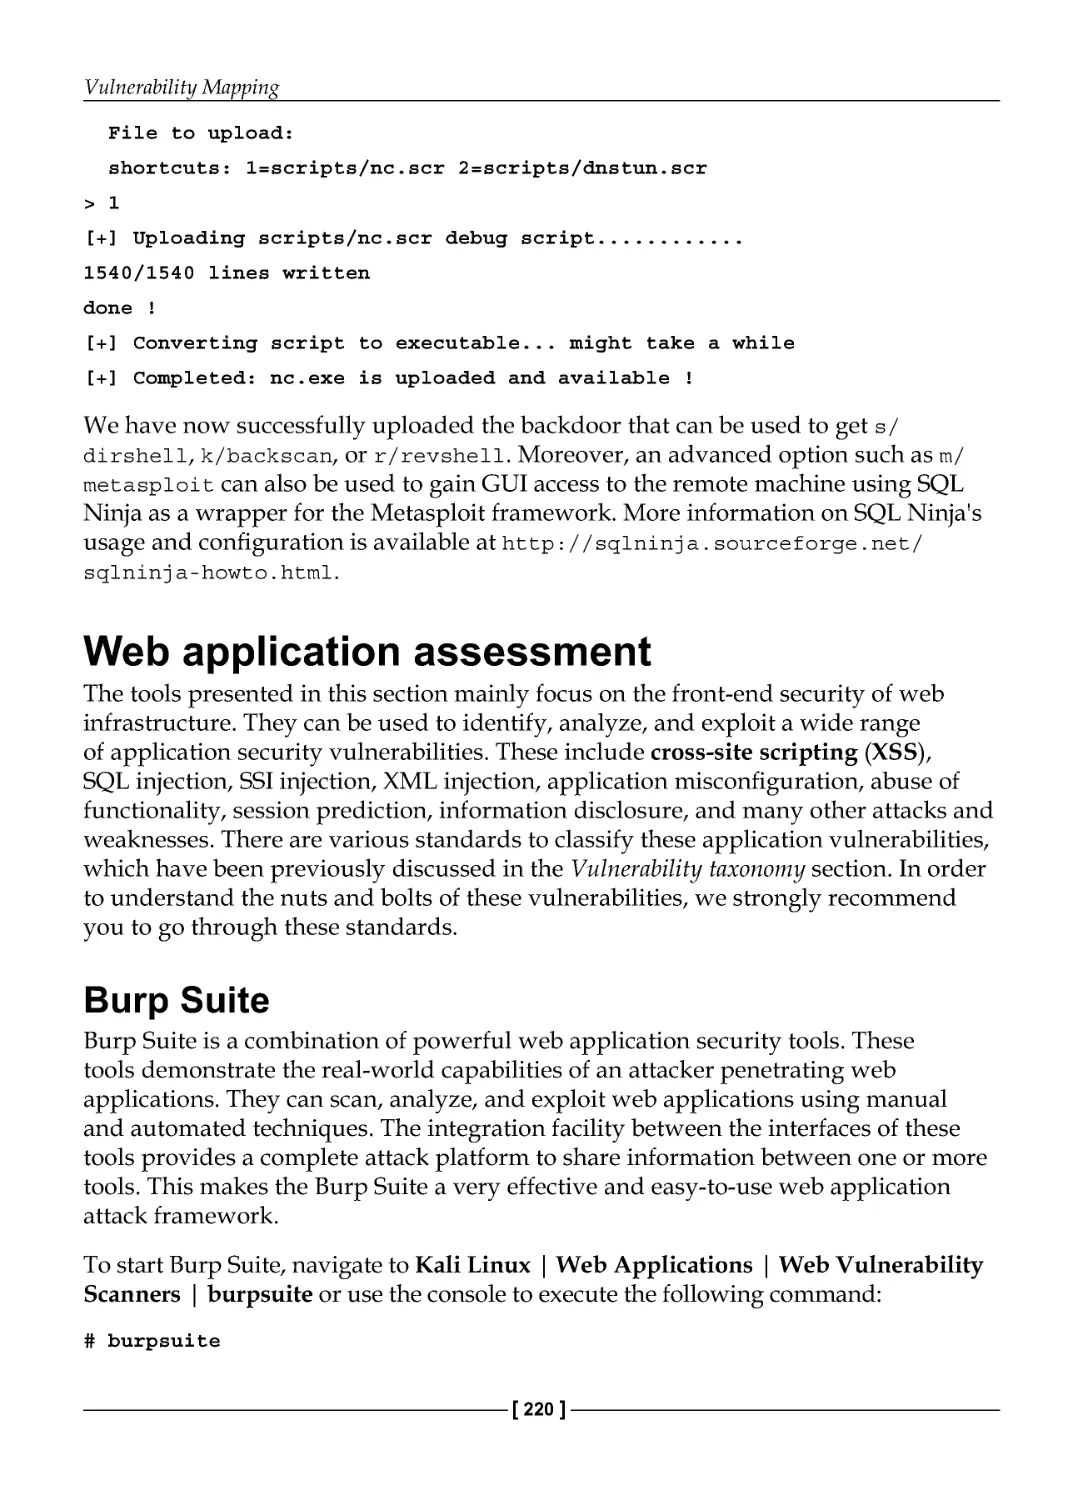 Web application assessment